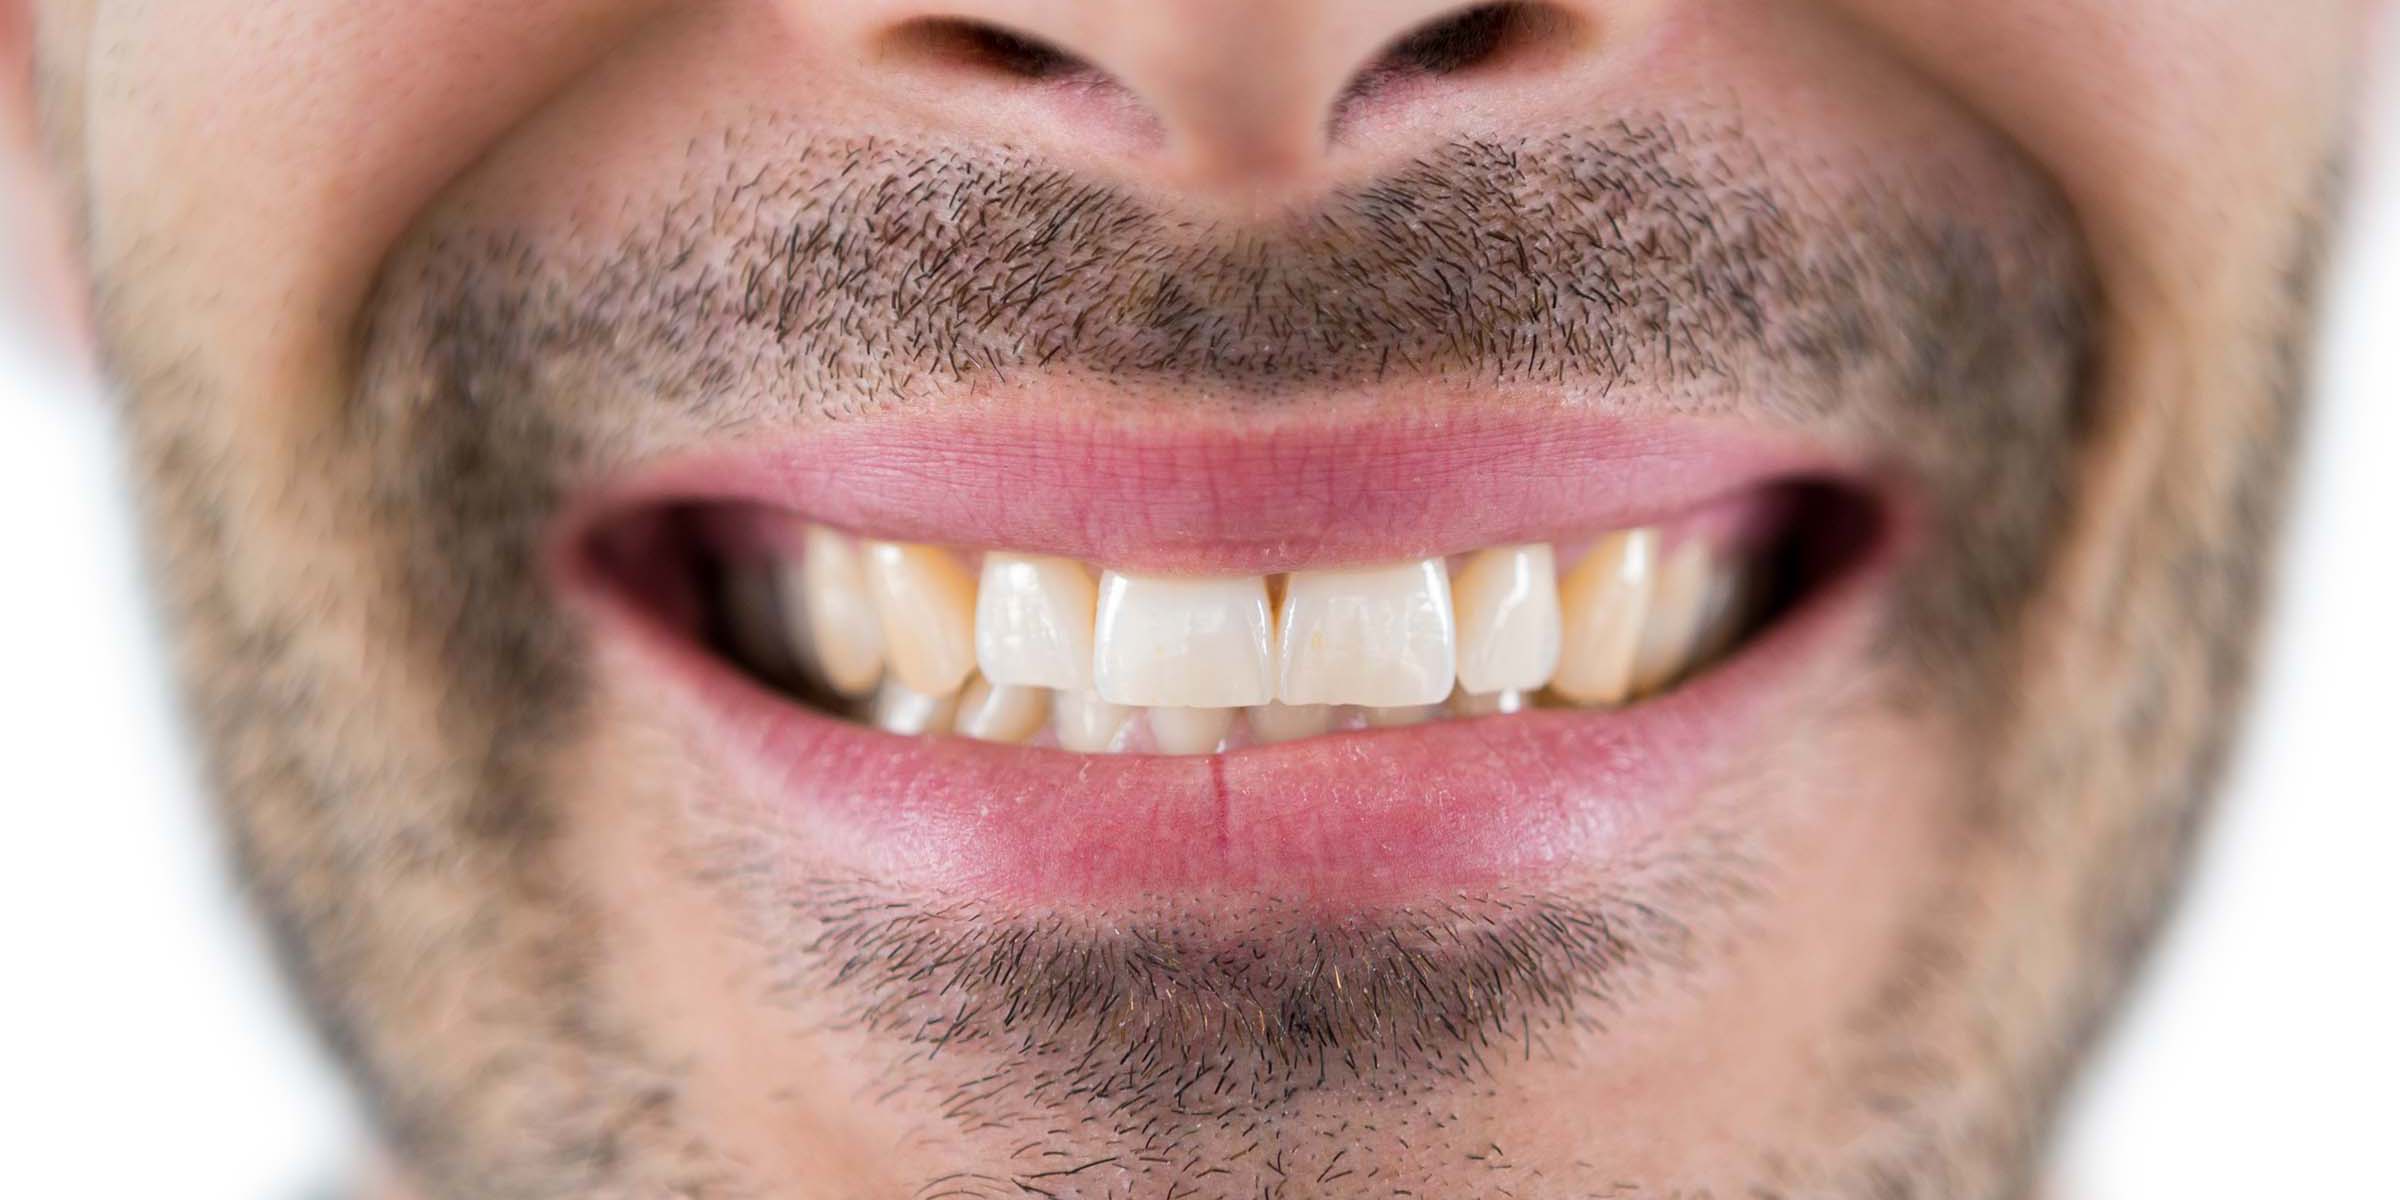 man-showing-his-teeth3-YUFNXWG.jpg